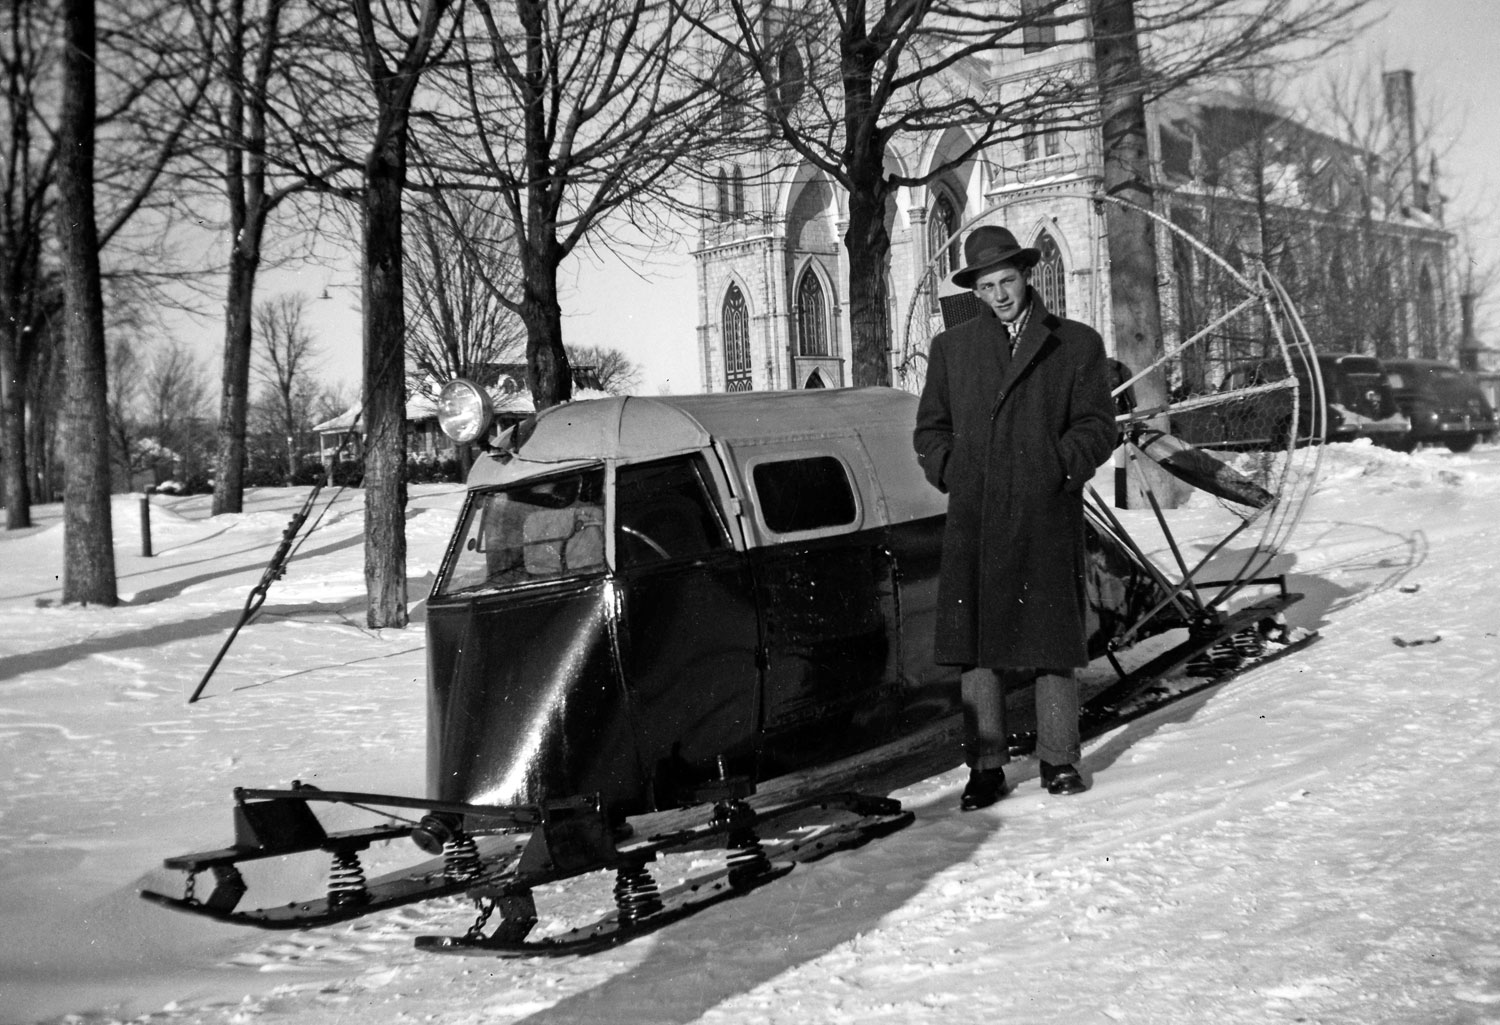 1948, Ste-Anne-de-la-Perade, Quebec. Is it a car, a Plane? No, it's a snowmobile! View full size.